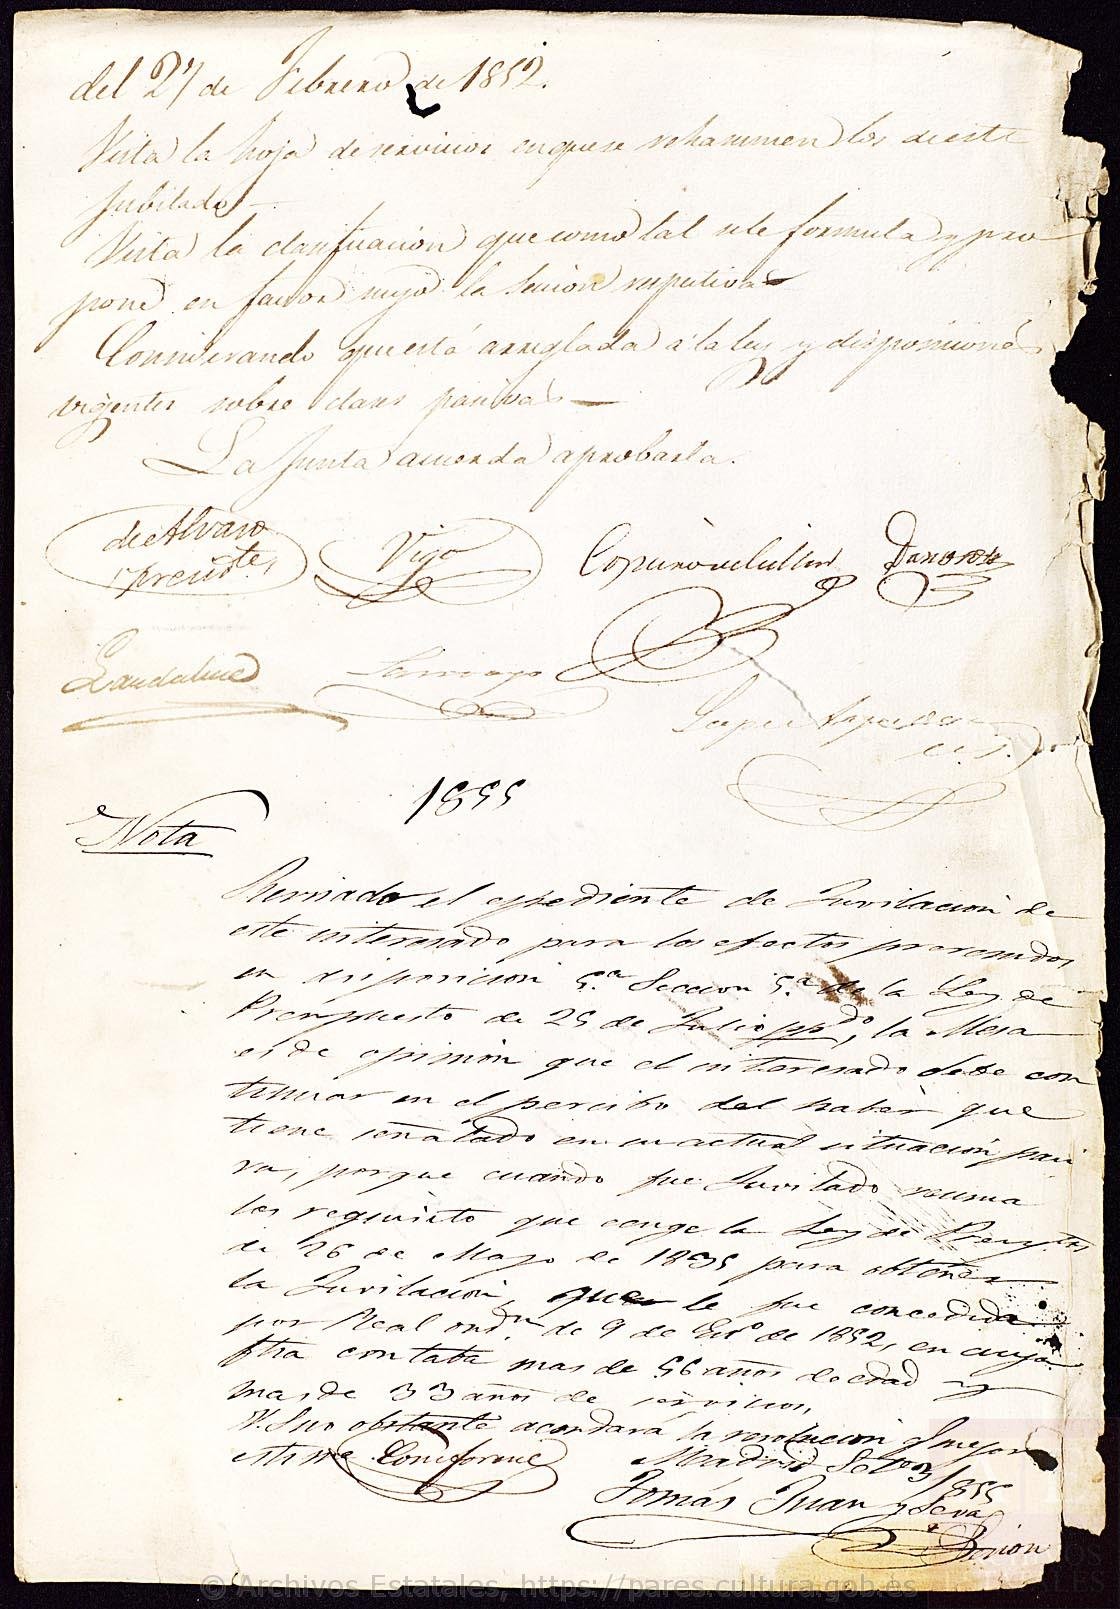 Archivo Historìco Nacional, España,  Retirement file for Police Commissioner Antonio Rodriguez, 1855  avalaible here
